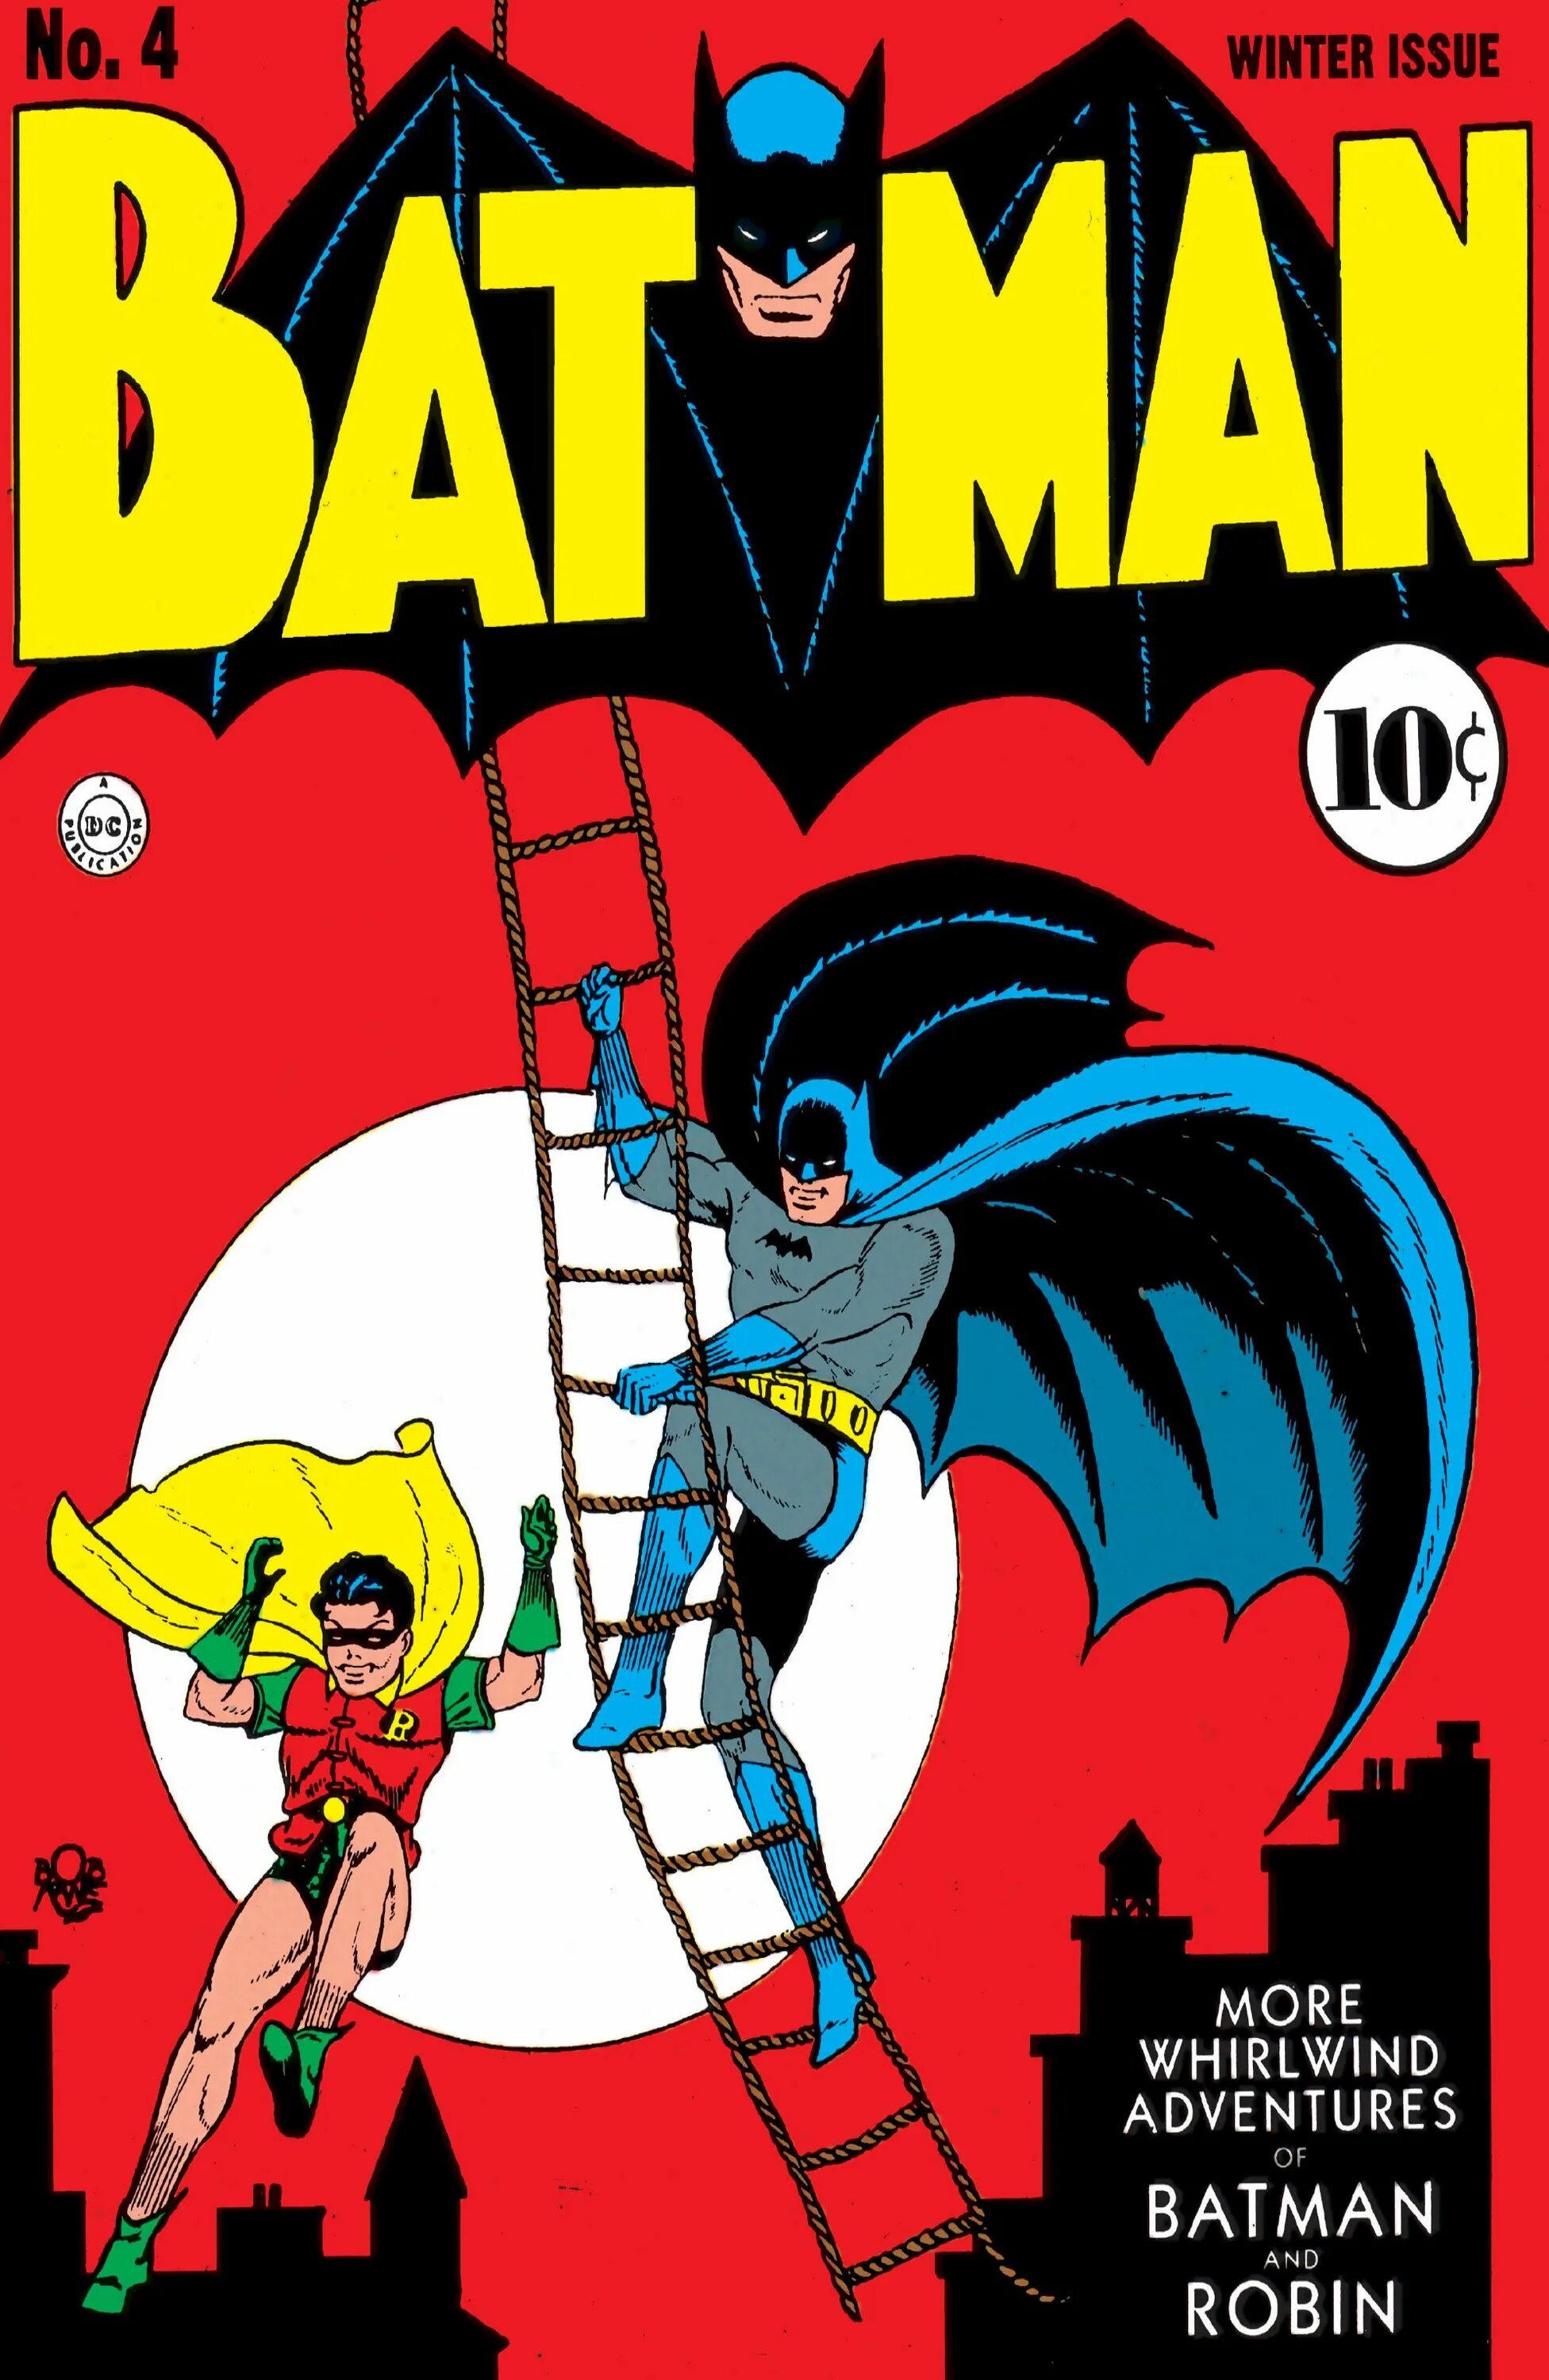 Бэтмен первые комиксы. Бэтмен первый комикс. Batman 1940. Первый комикс с Бэтменом. Batman #1 (1940).